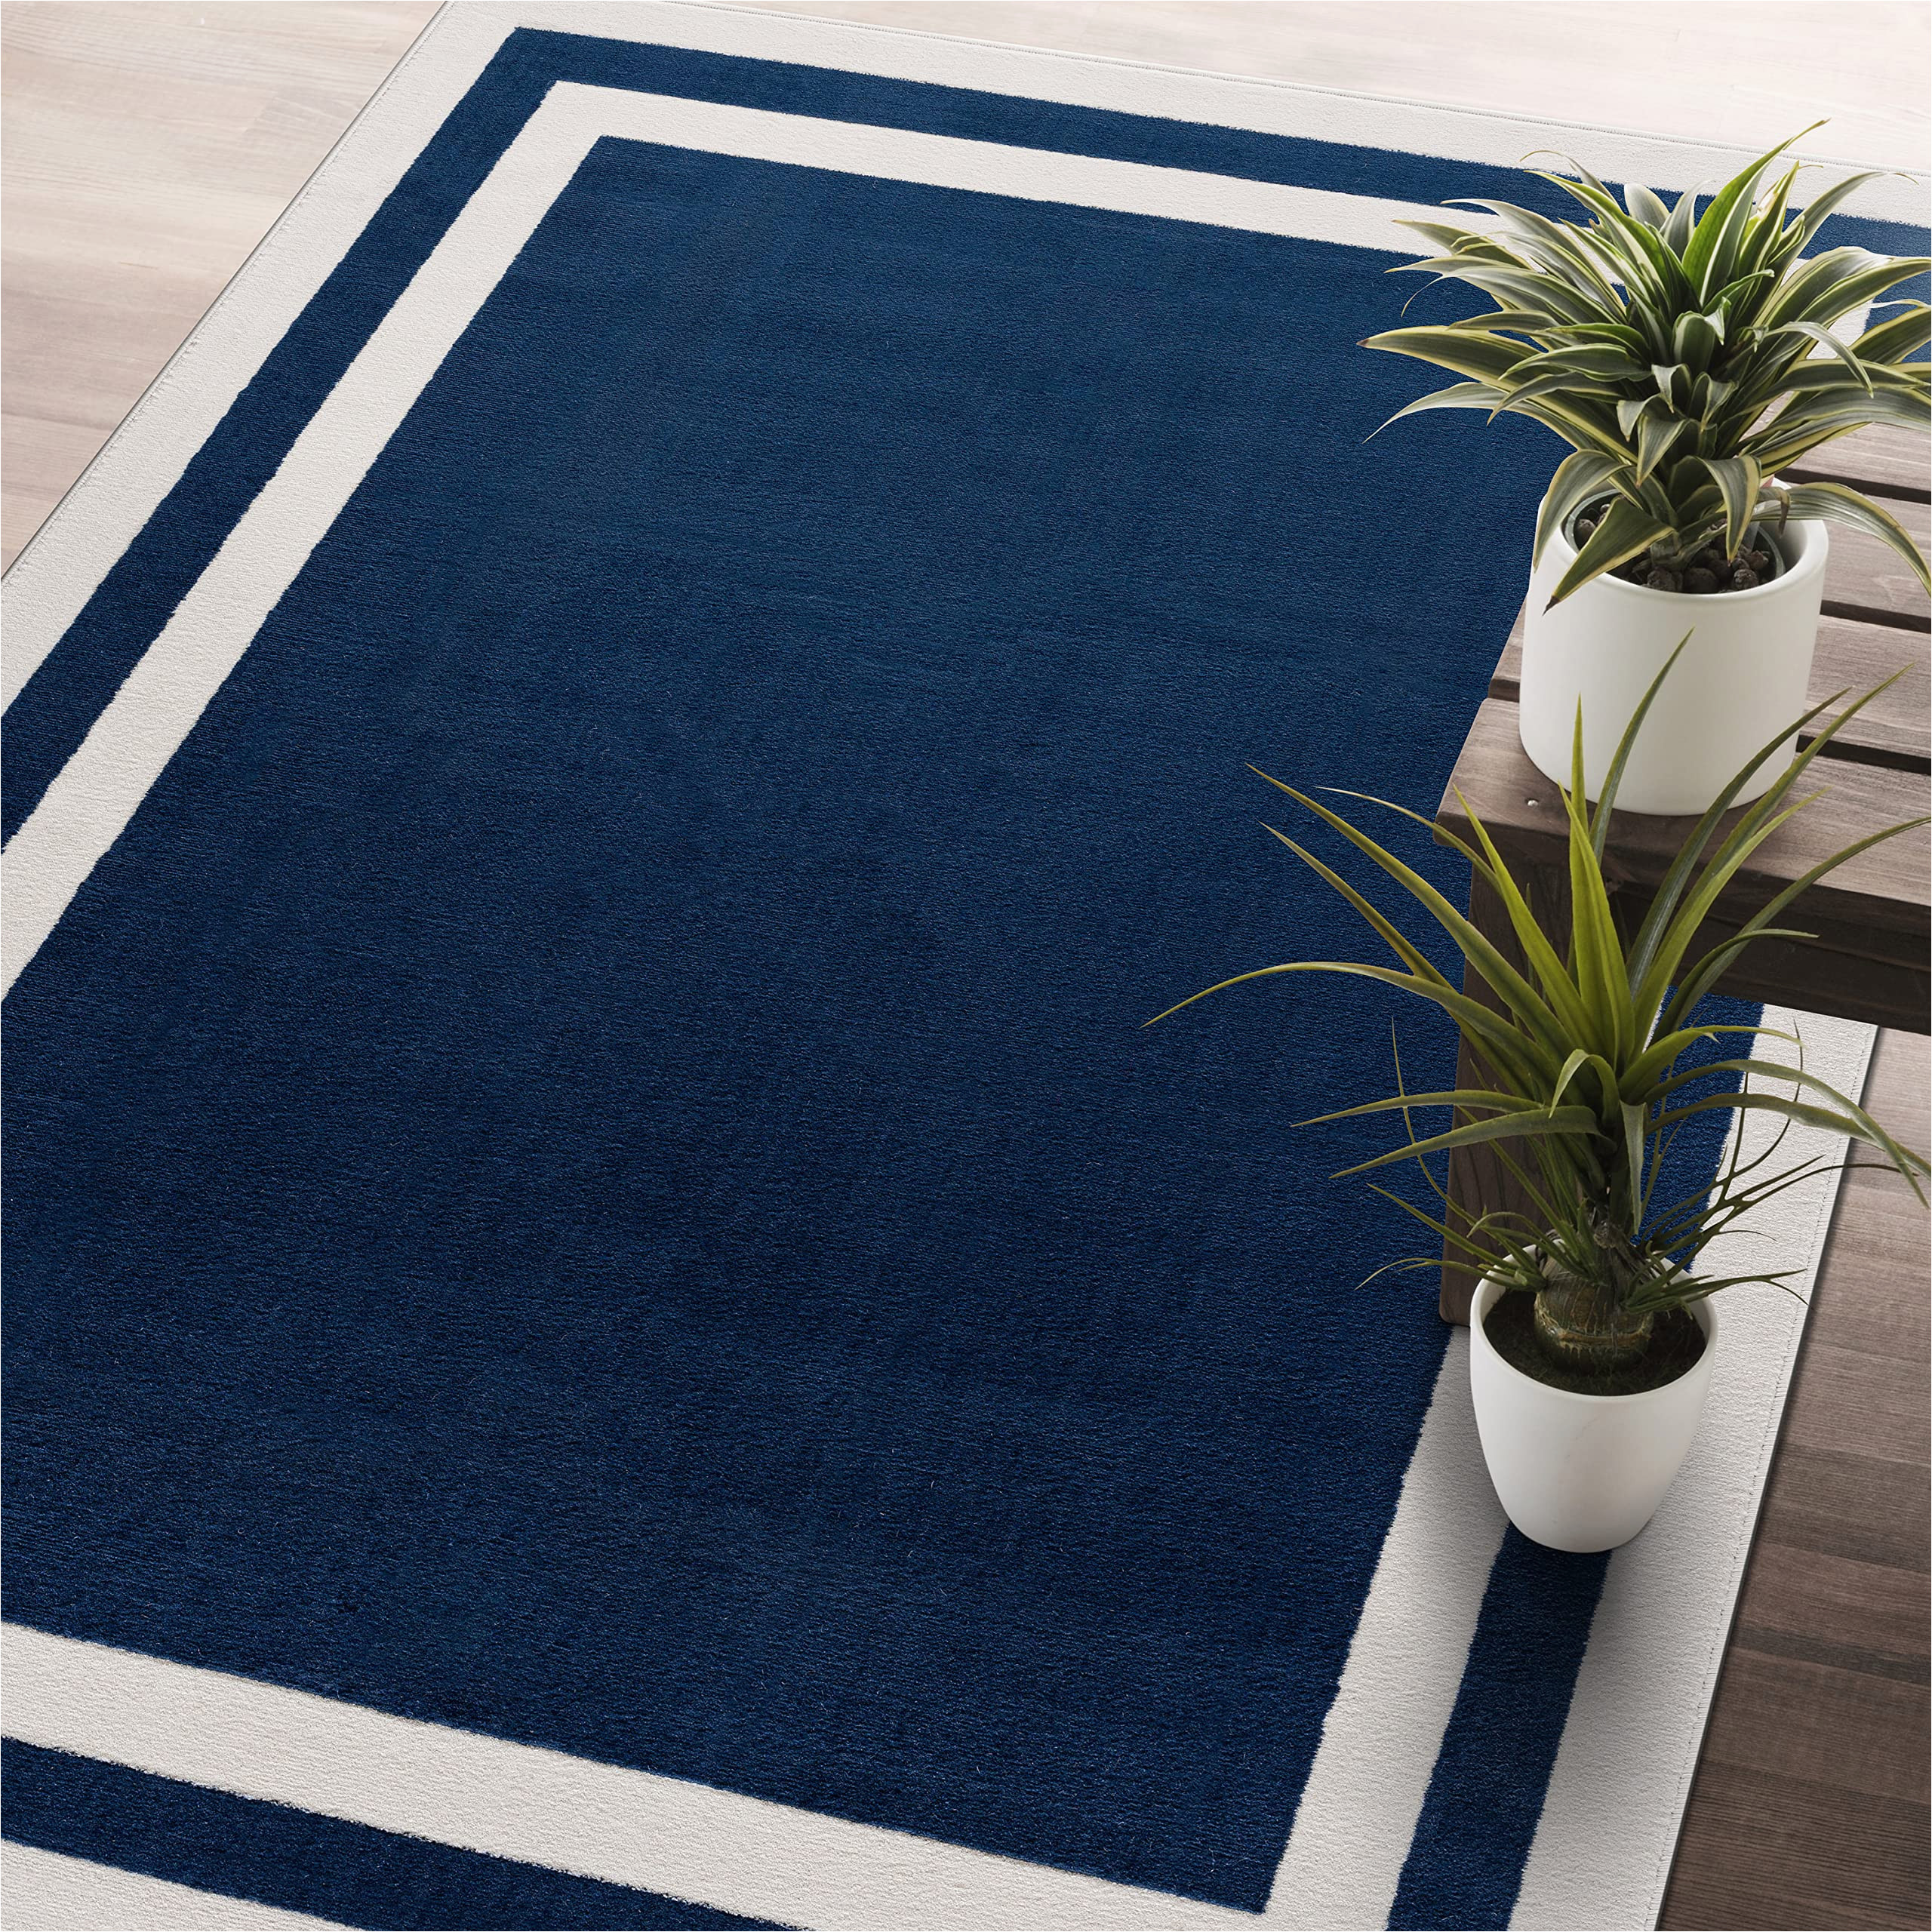 Blue area Rugs 3×5 Camilson Navy Blue area Rug 3’3″ X 5′, Bordered Design for Living Room Bedroom, Navy Blue / Cream Indoor Carpet